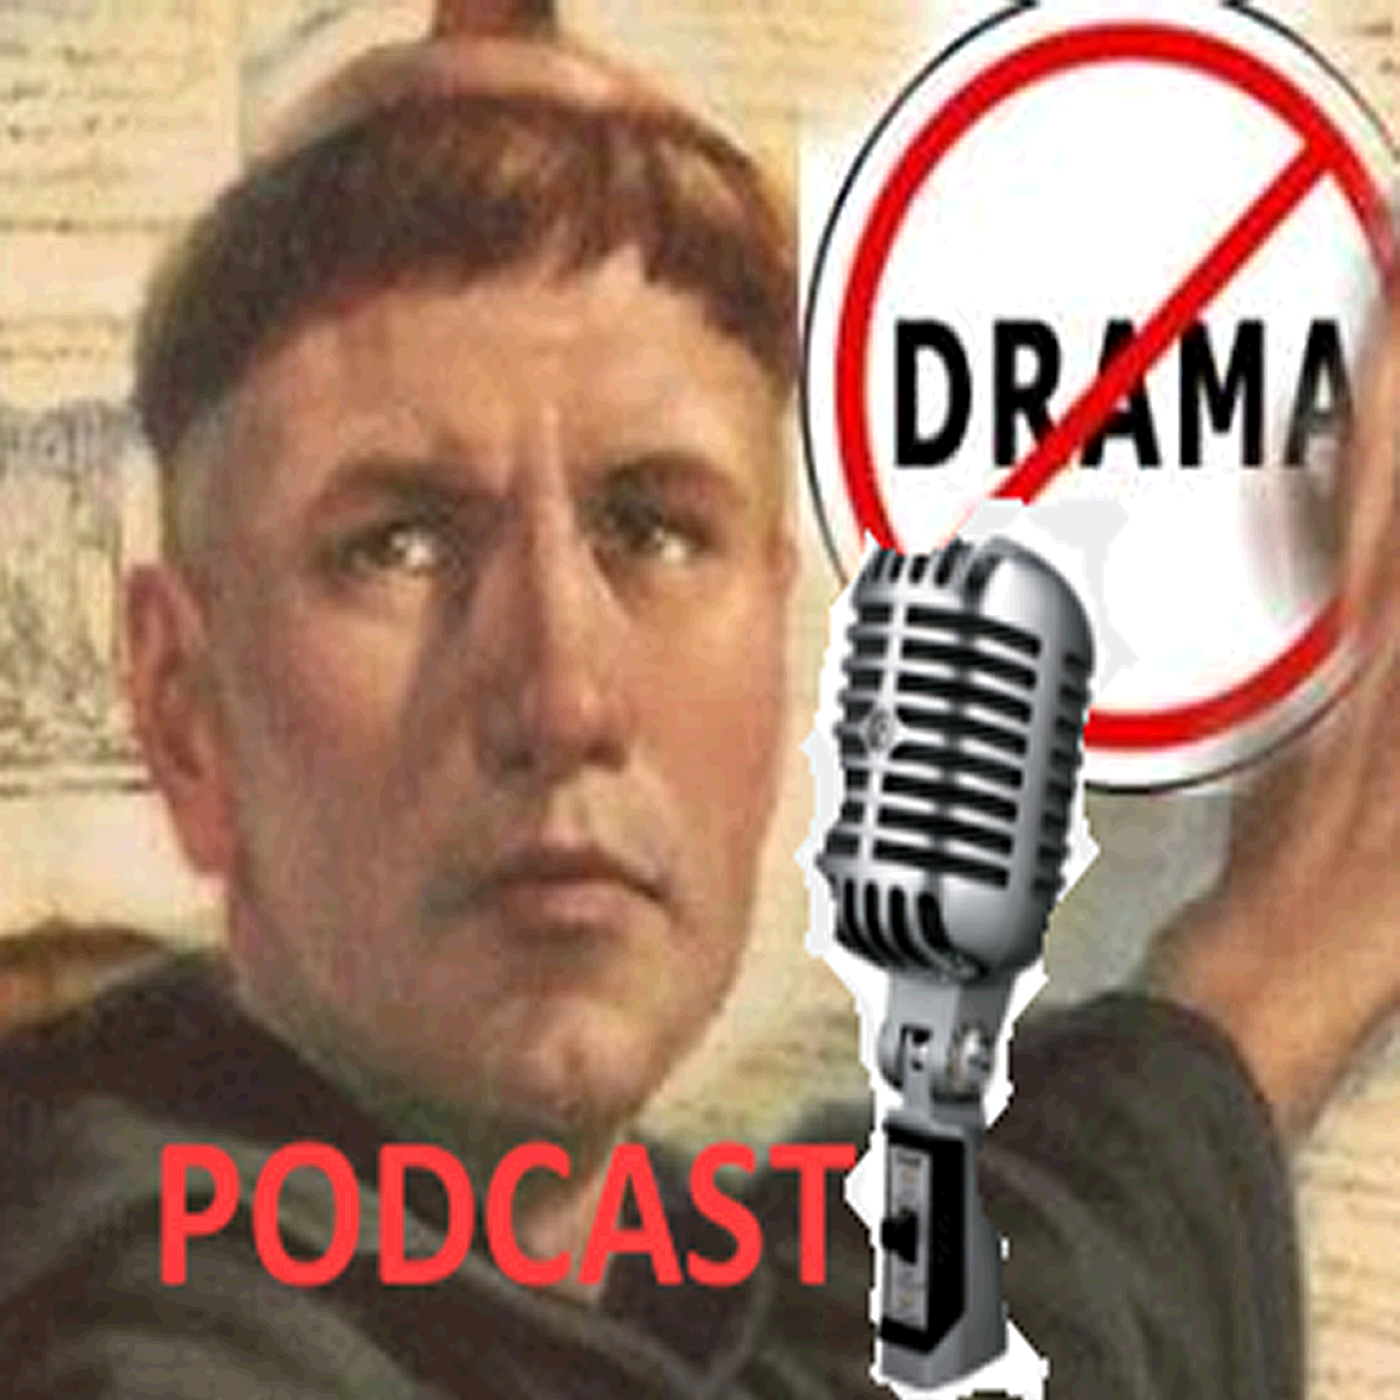 NO DRAMA Podcast - Episode 16: Romans 12:1-8